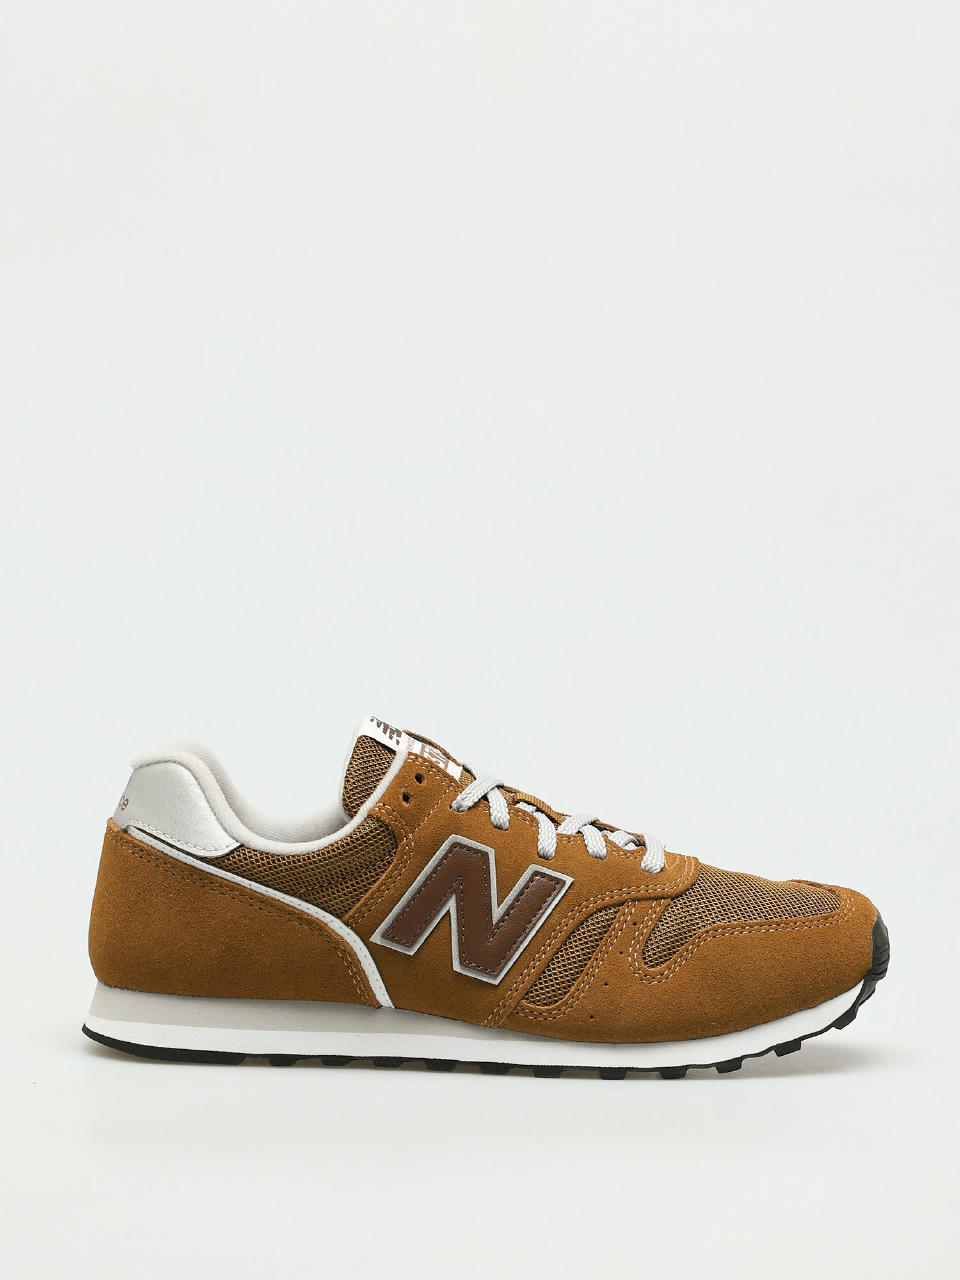 Buy New Balance Brown 373 Sneaker For Men Online @ Tata CLiQ Luxury